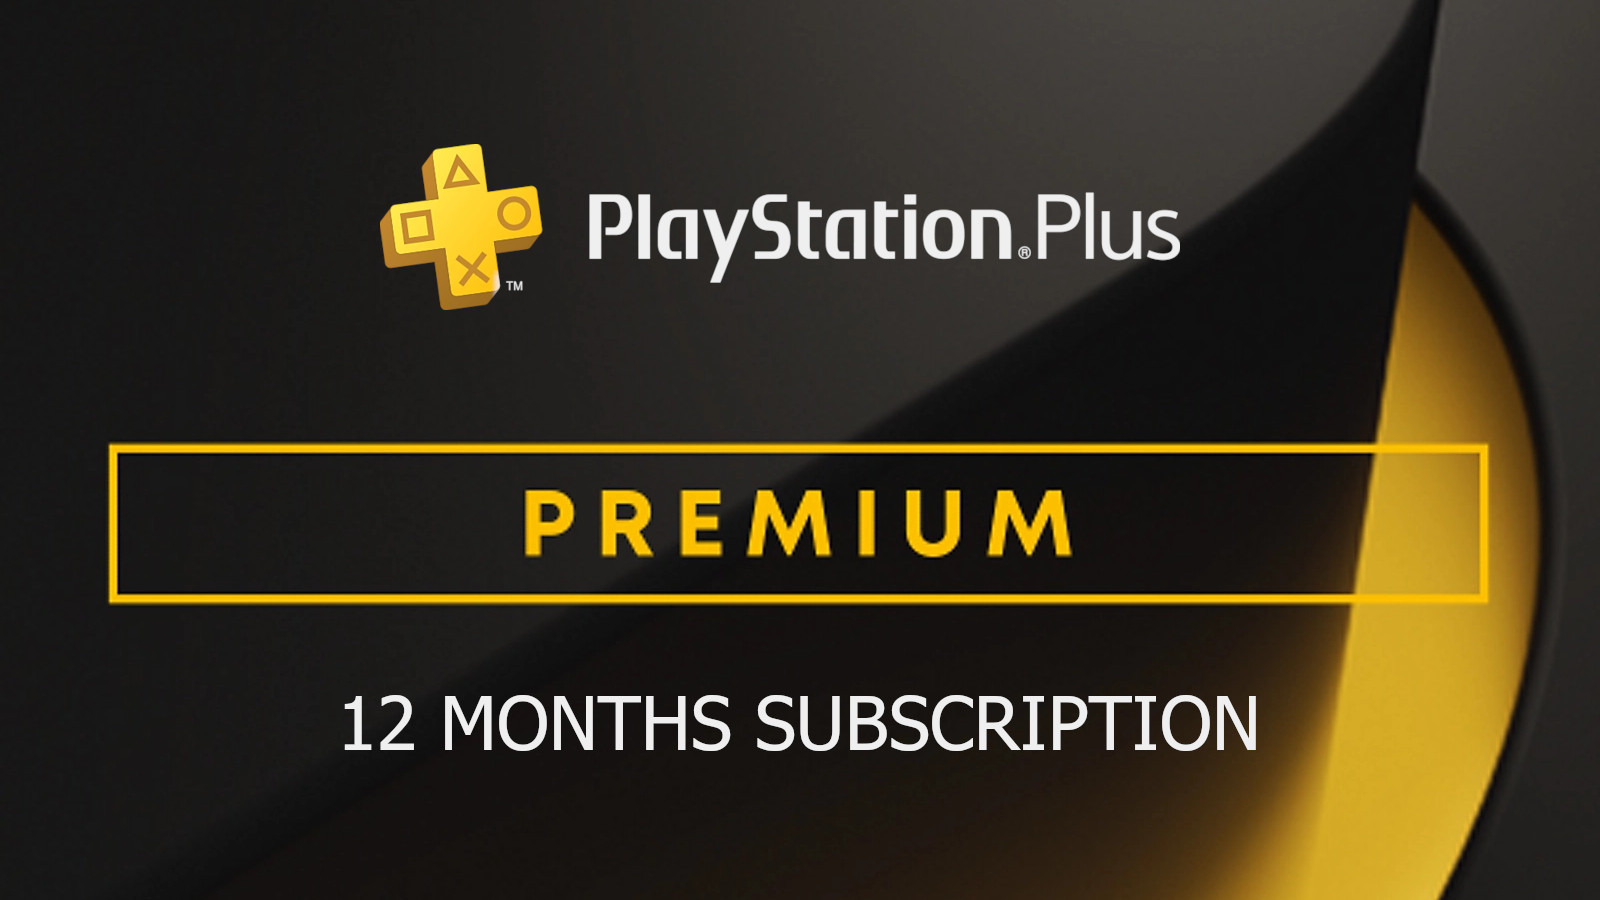 PlayStation Plus Premium 12 Months Subscription ACCOUNT, 100.5 usd